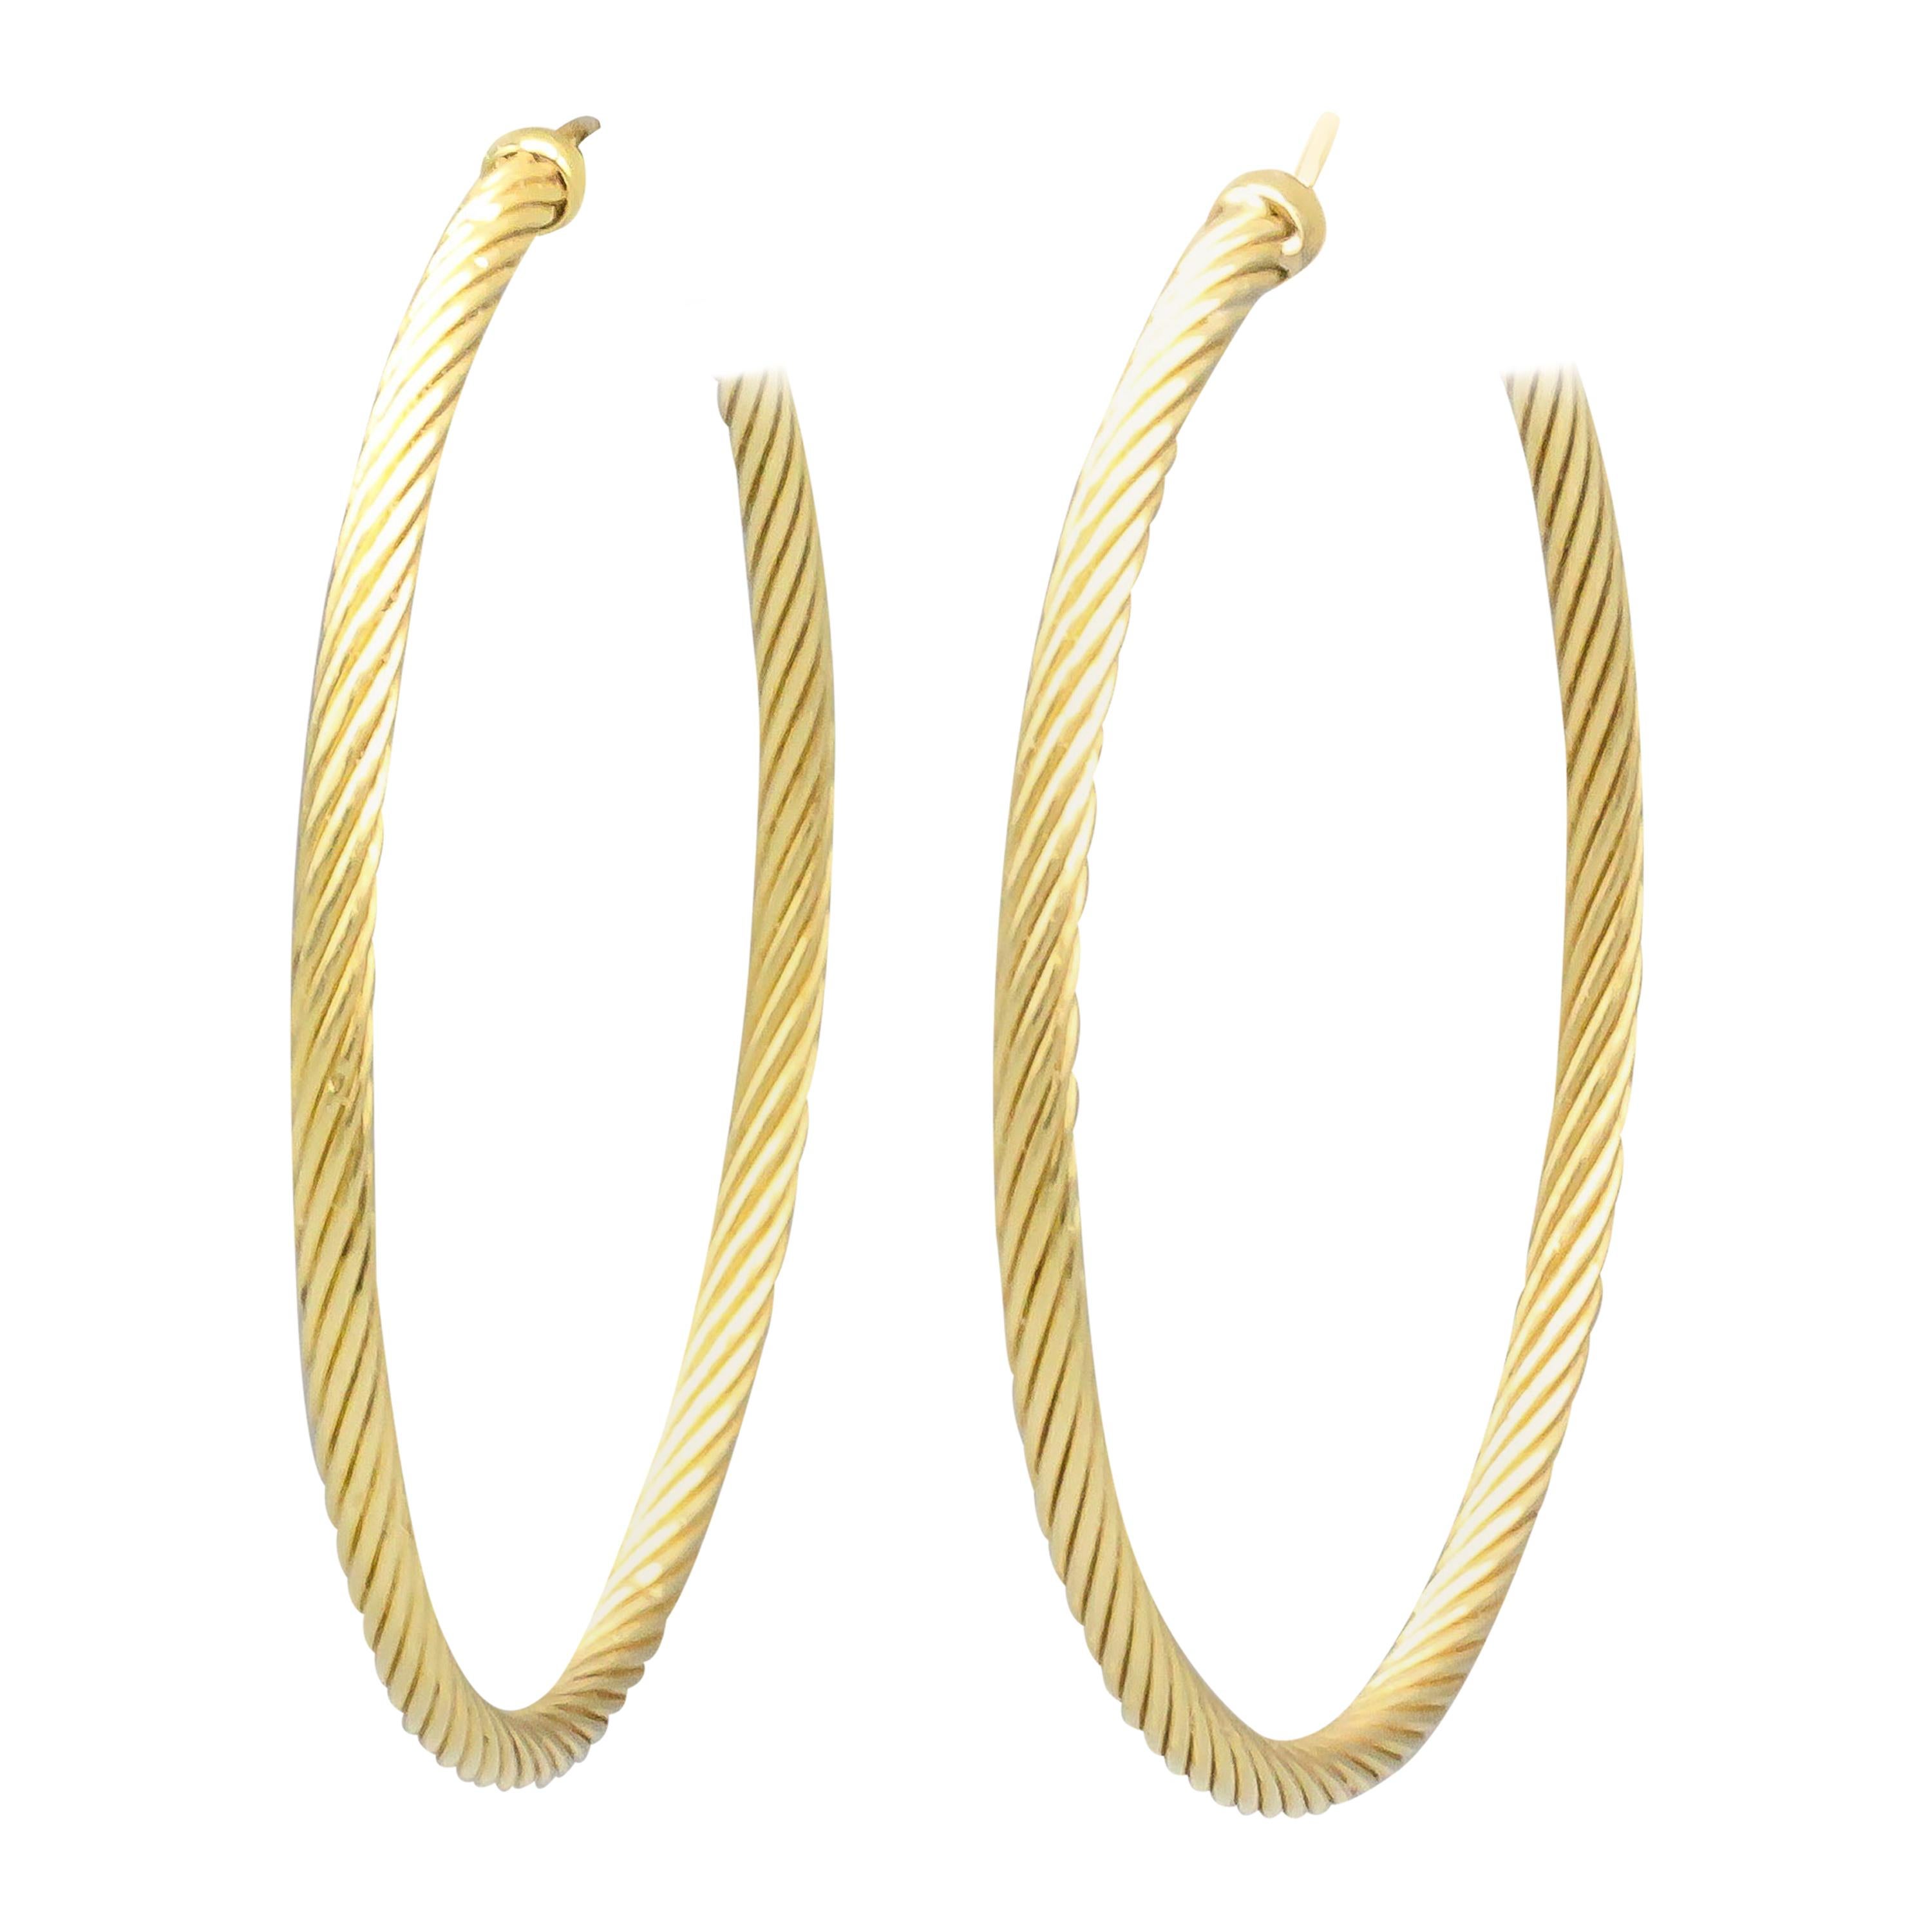 David Yurman Large 18 Karat Gold Cable Hoop Earrings